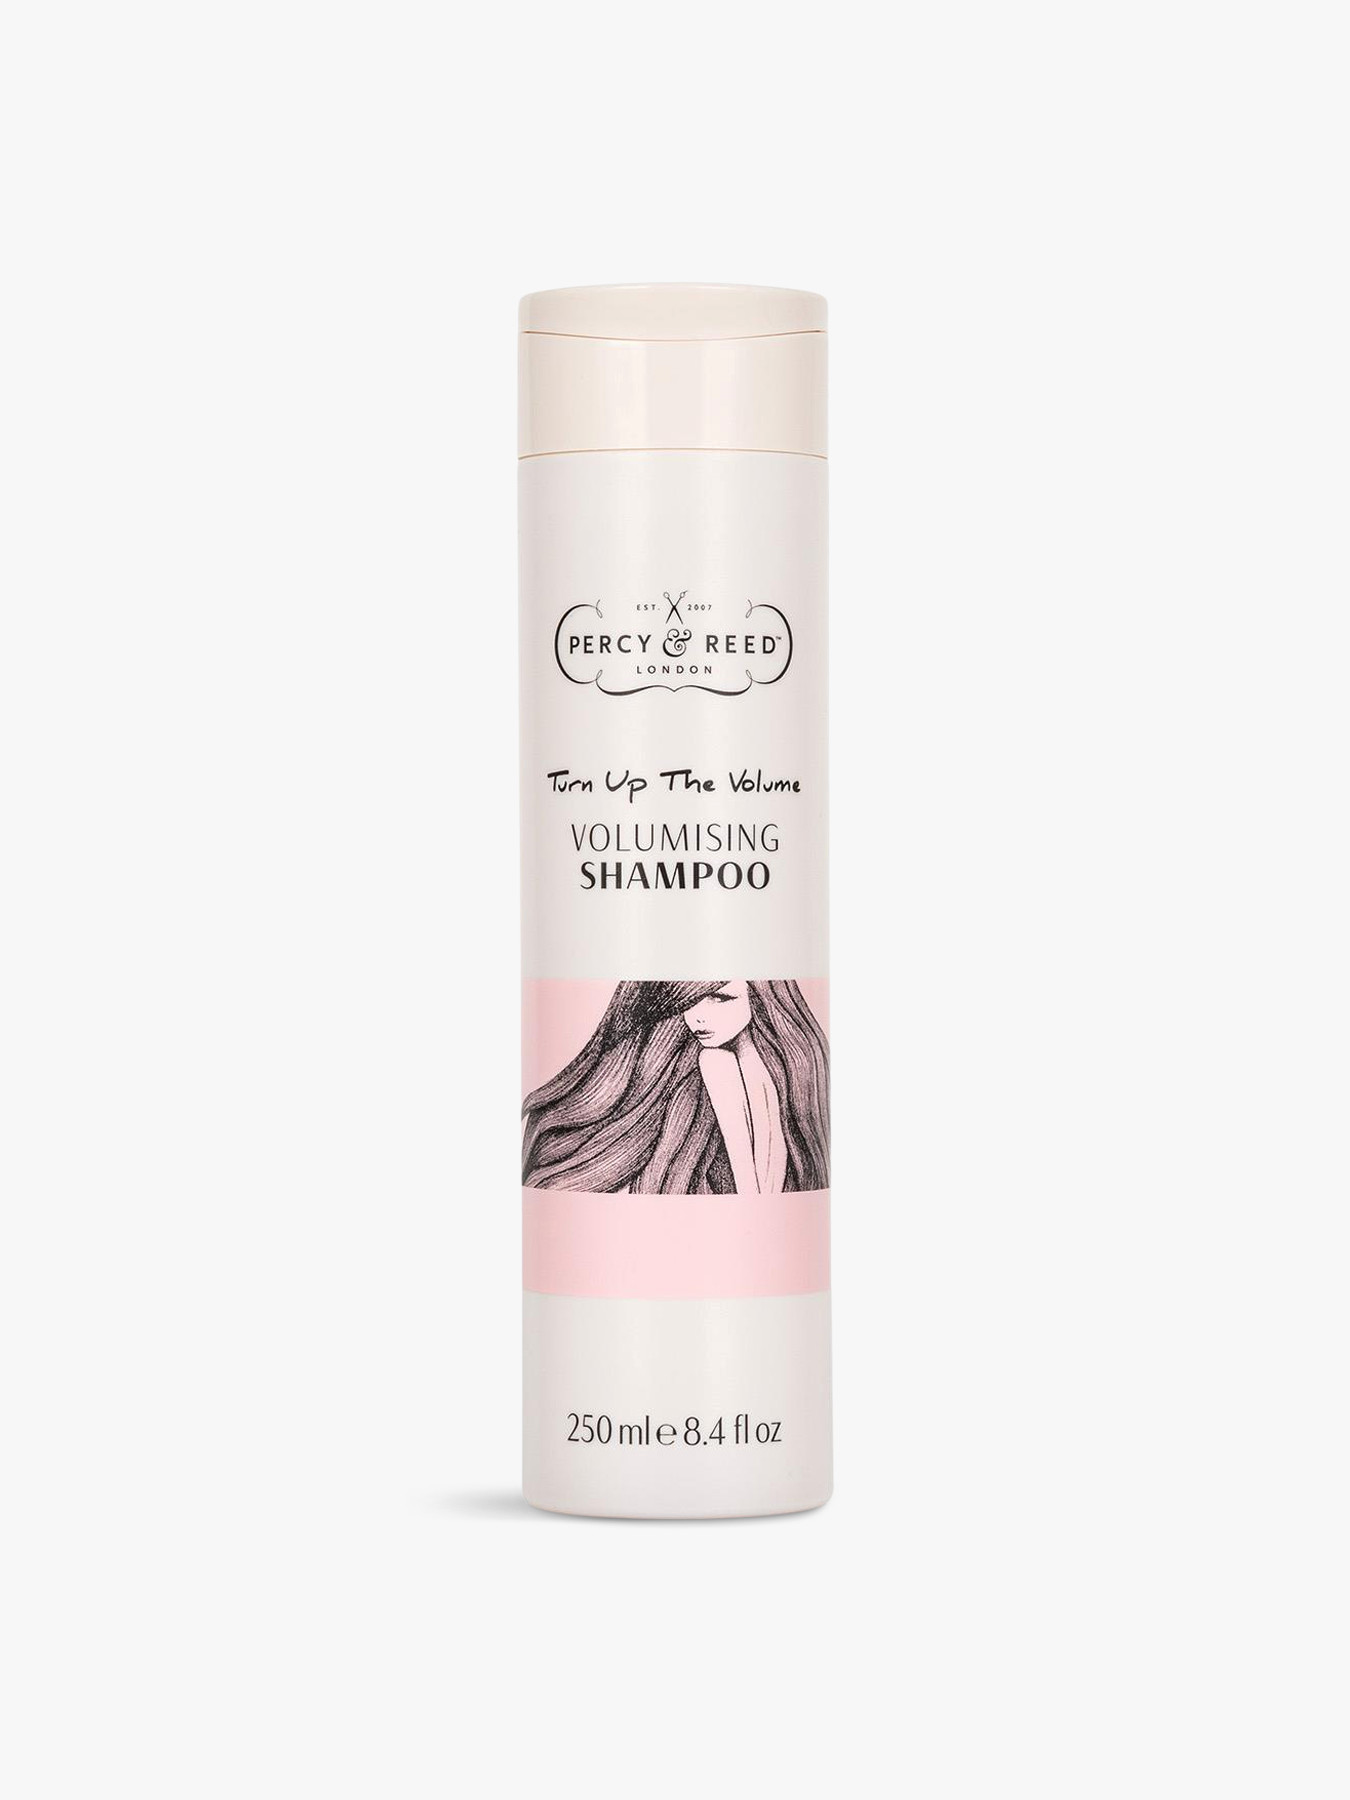 Percy & Reed Turn Up The Volume Volumising Shampoo 250ml